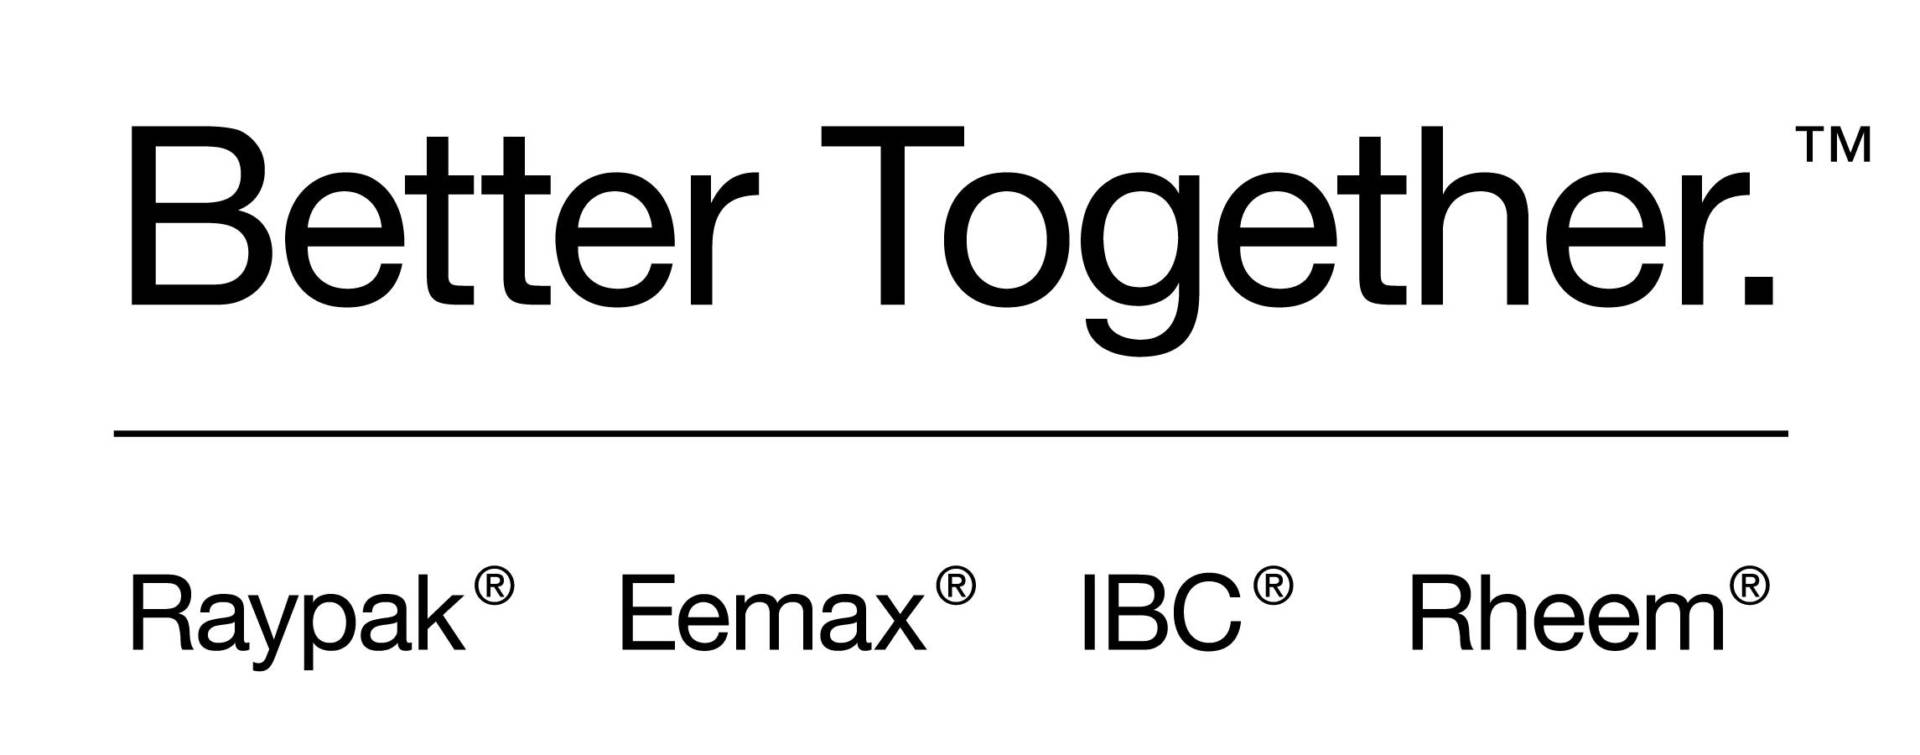 Rheem_better-together-logos